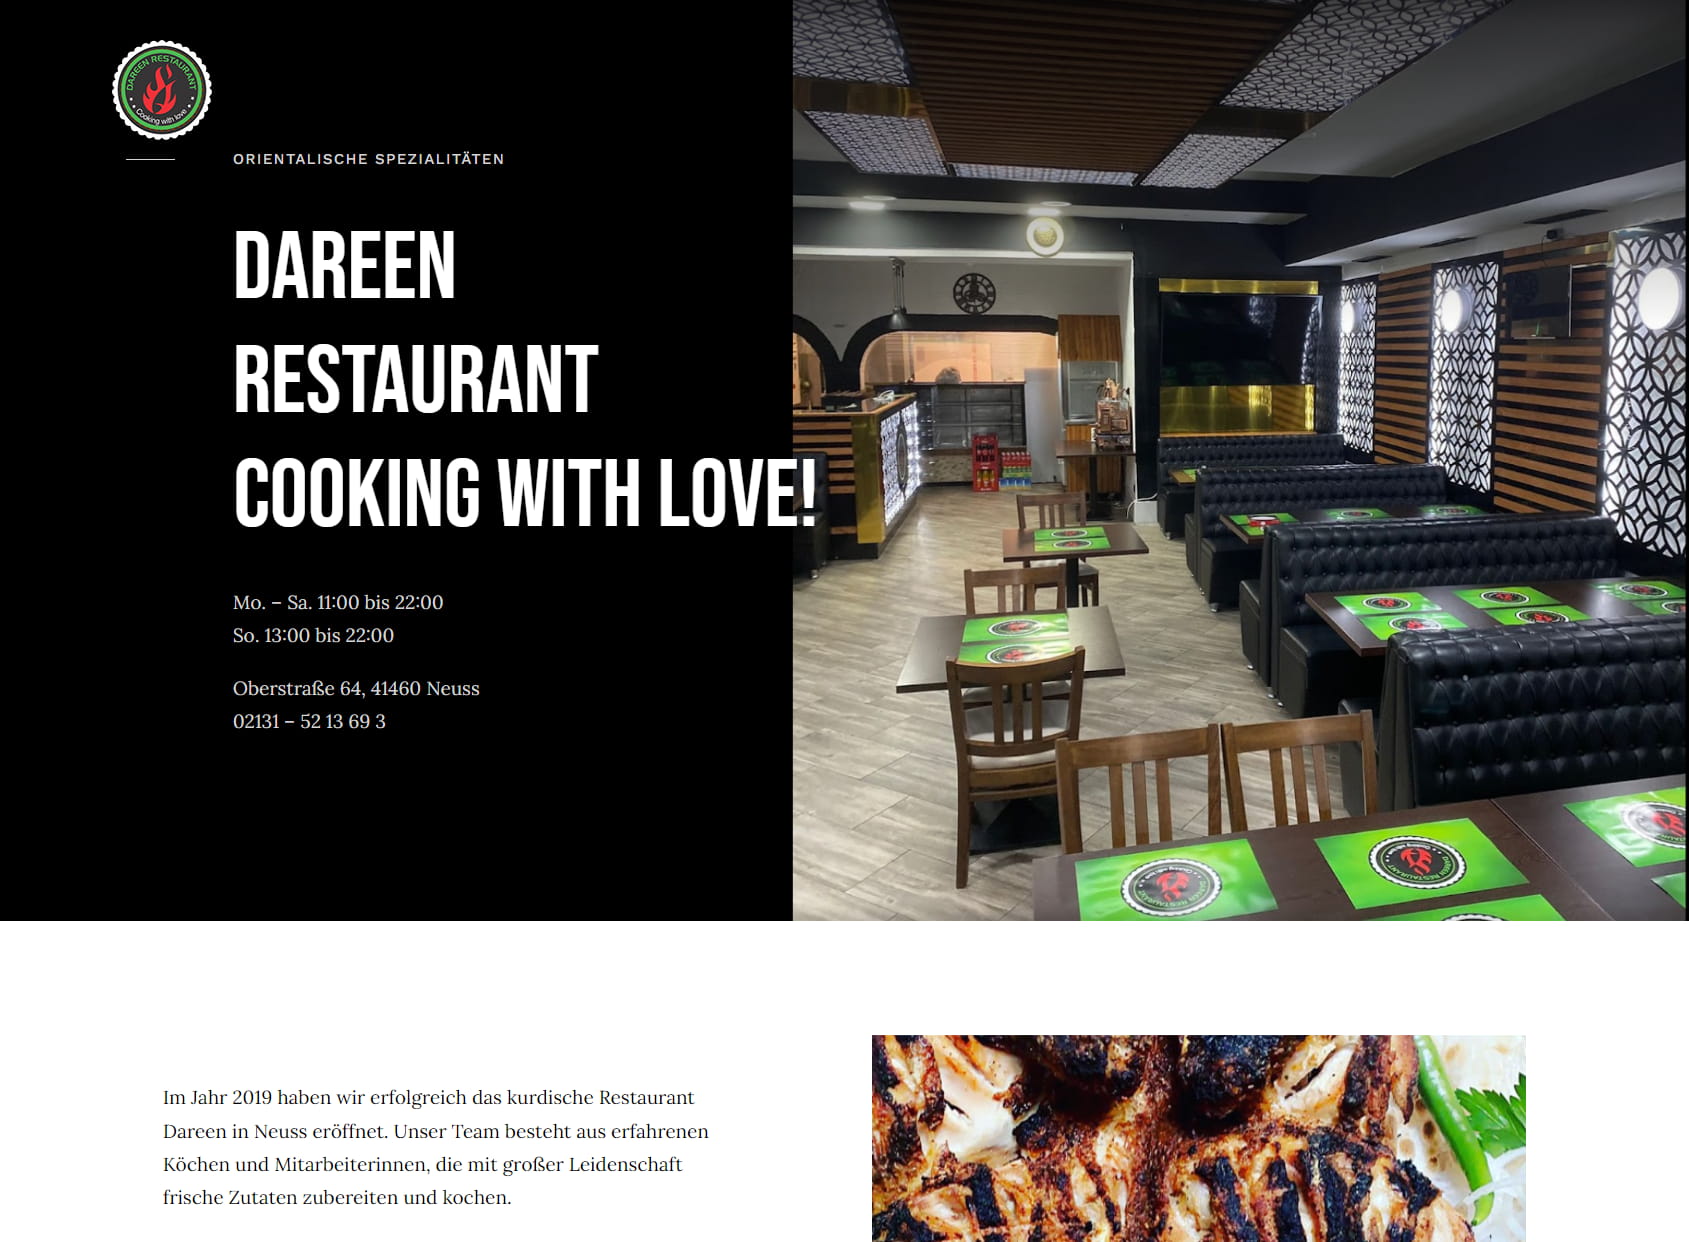 Dareen Restaurant